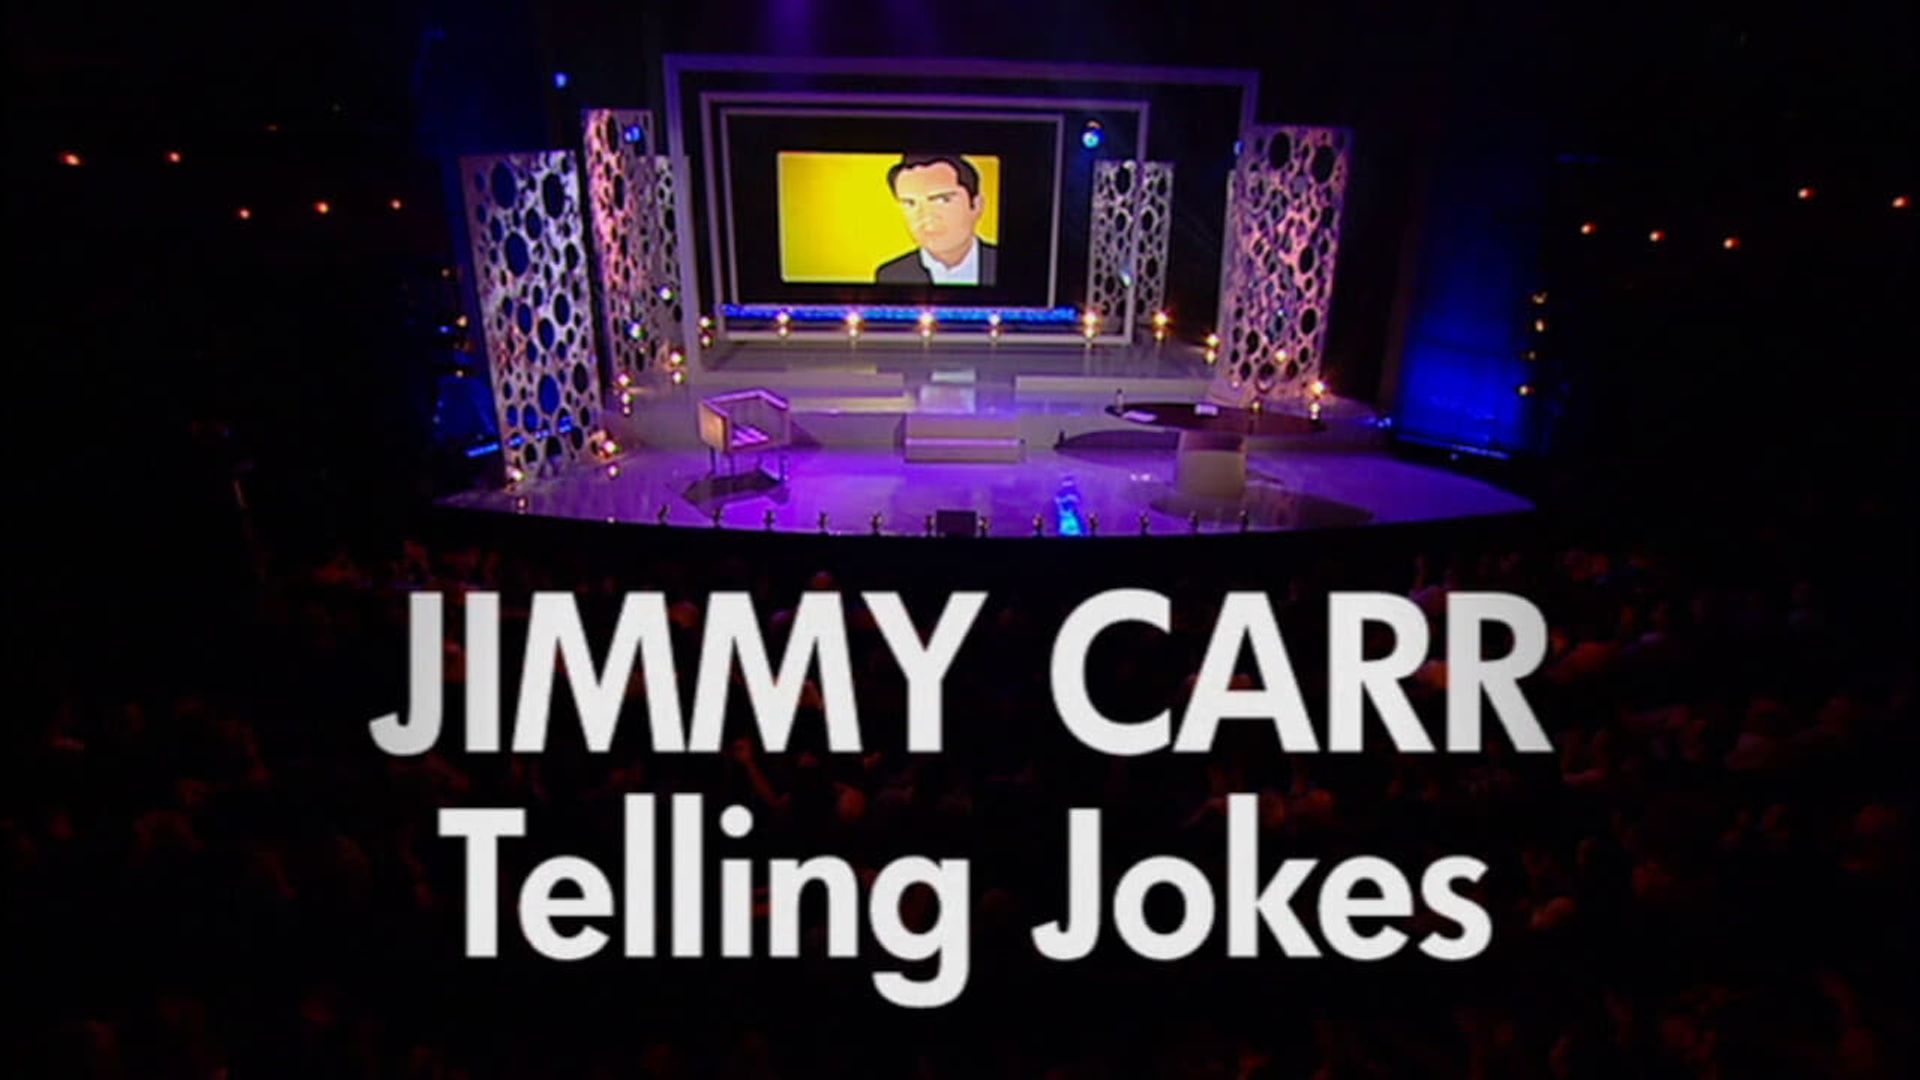 Jimmy Carr: Telling Jokes background